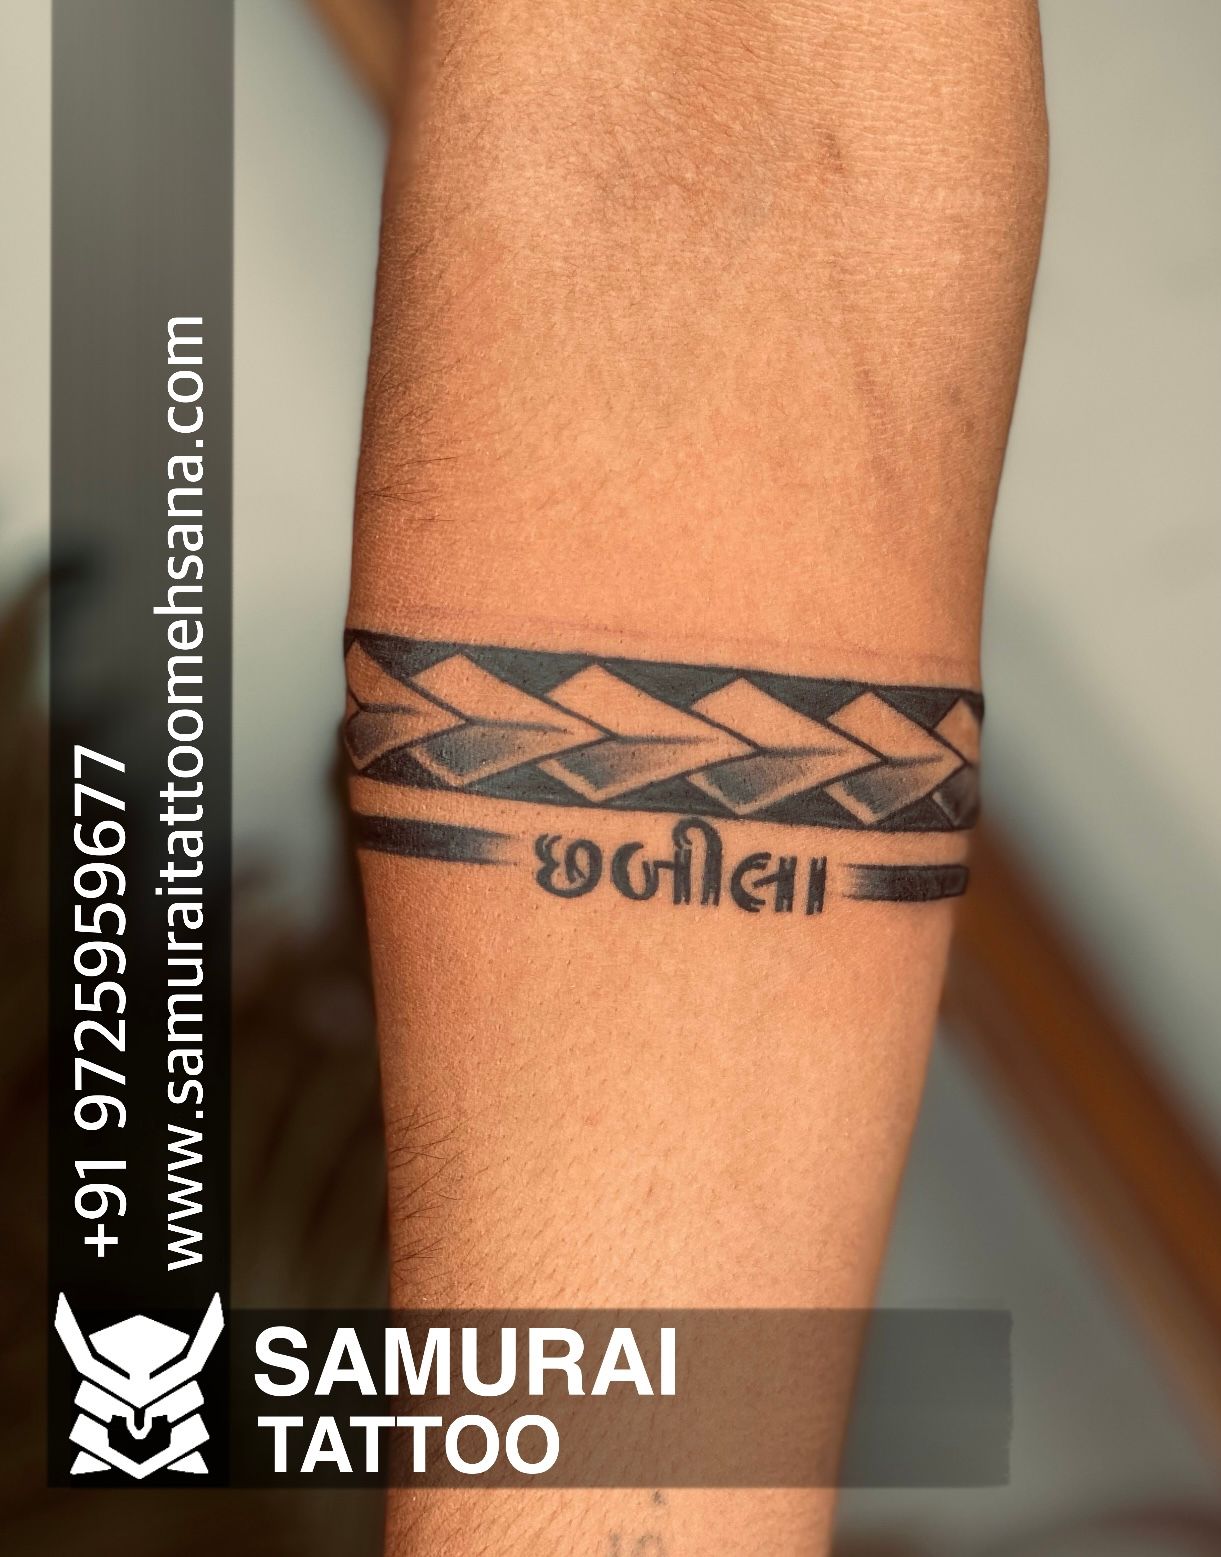 Tattoo uploaded by Vipul Chaudhary • Band tattoo |Band tattoo design |Band  tattoo with name |tattoo for boys |Boys tattoo design • Tattoodo